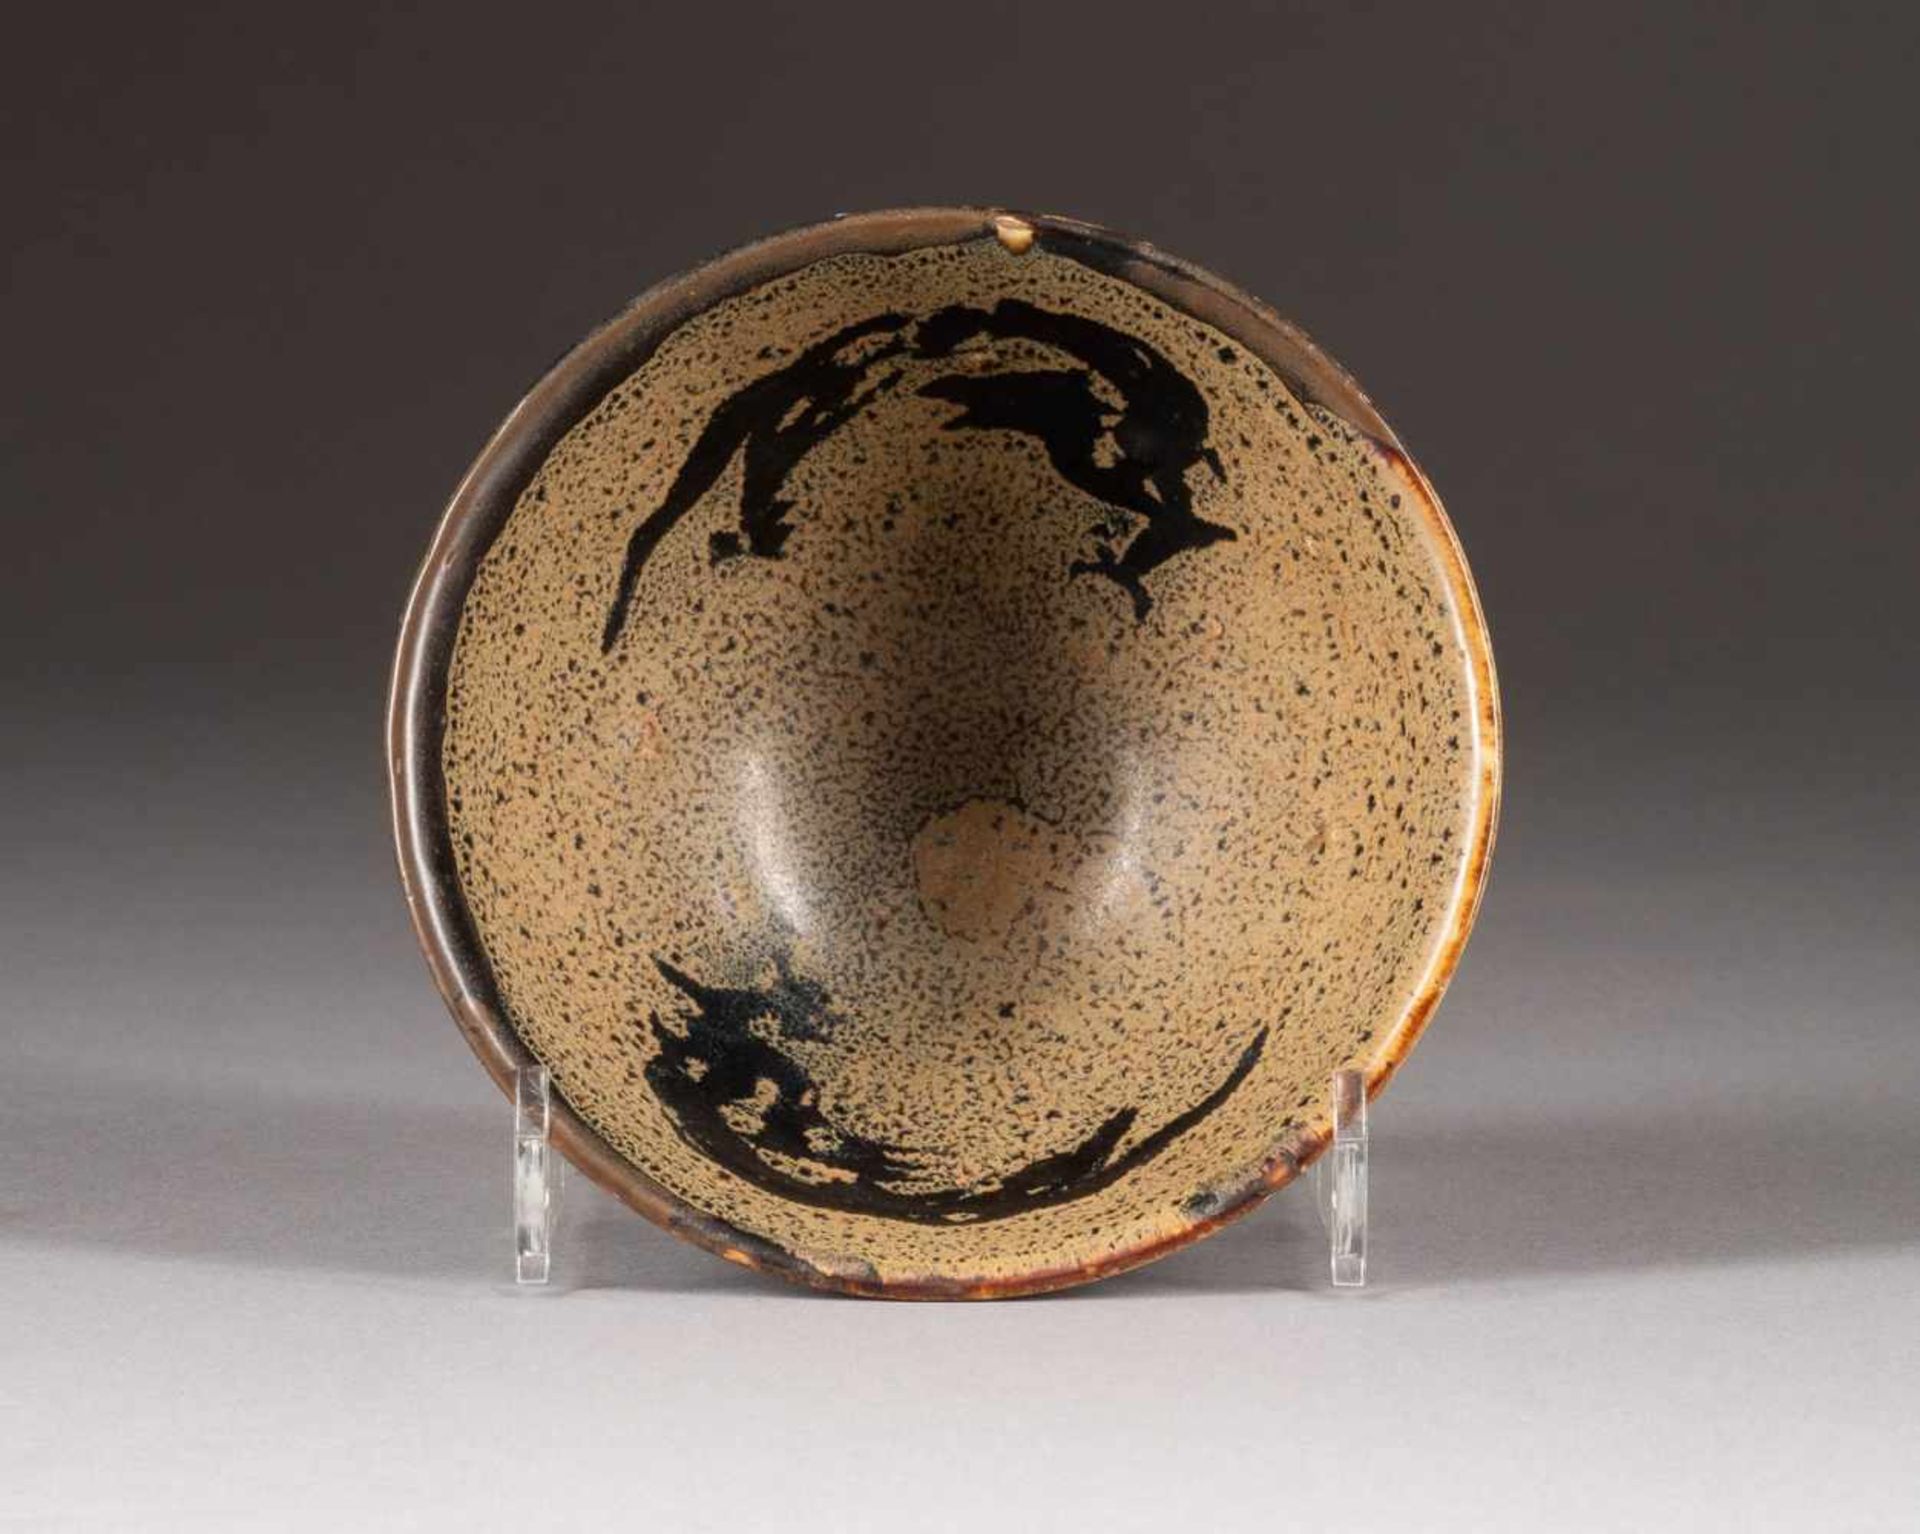 TEESCHALE MIT FABELWESEN Japan/Korea (?), 19. Jh. oder früher Keramik, schwarz-braune Glasur. H. 6,8 - Image 2 of 2